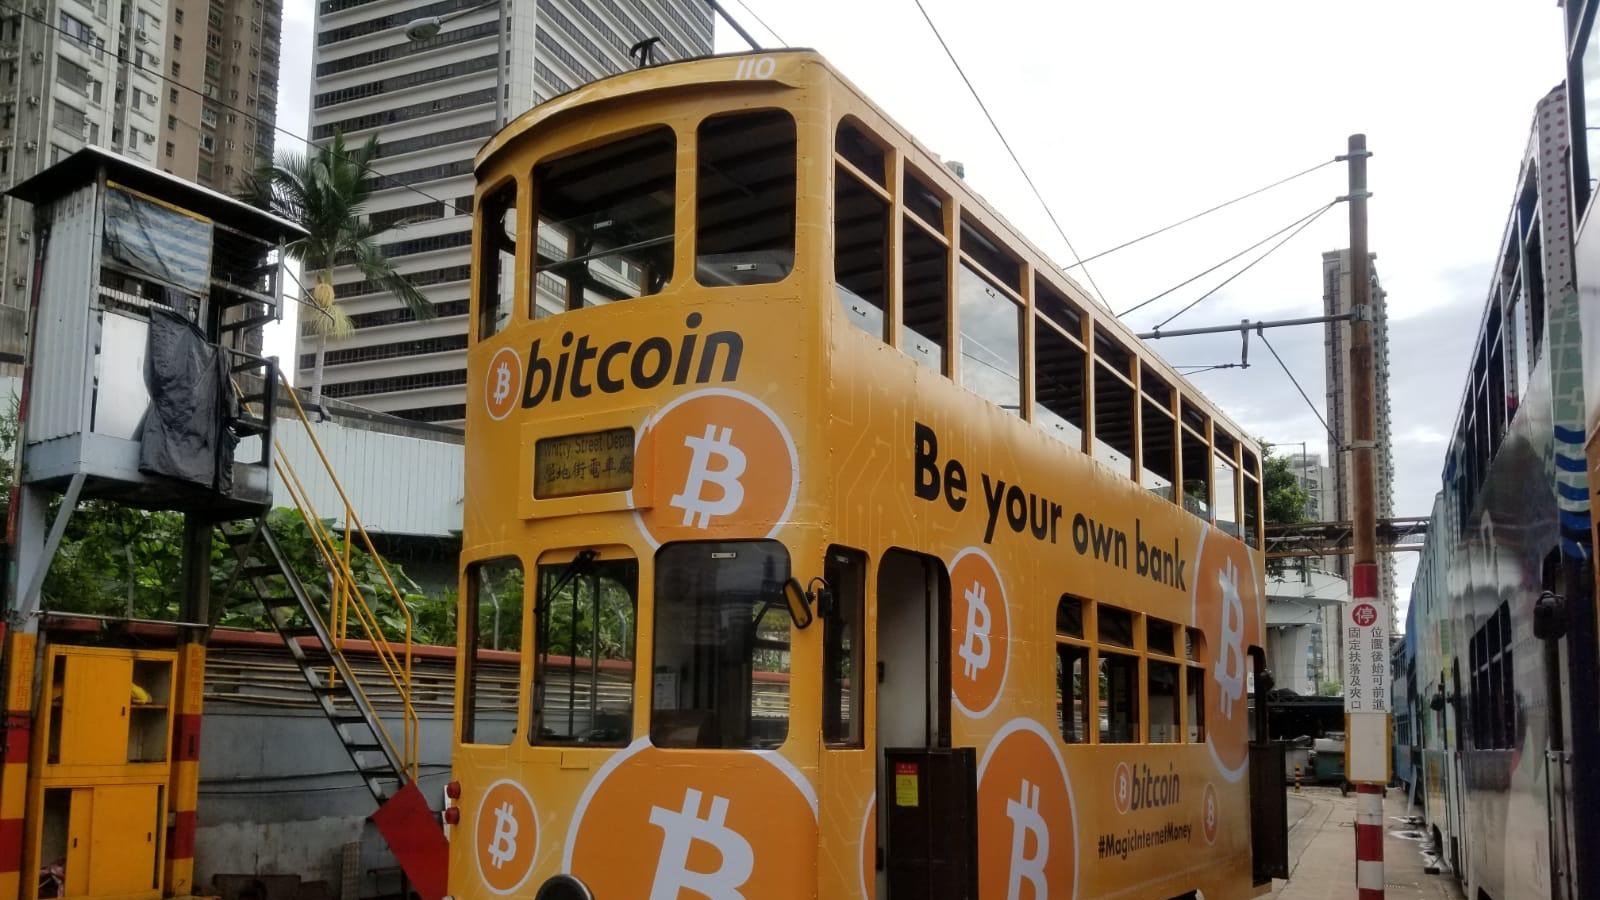 Trams with Bitcoin logo in Hong Kong. Source: Bitcoin Association of Hong Kong